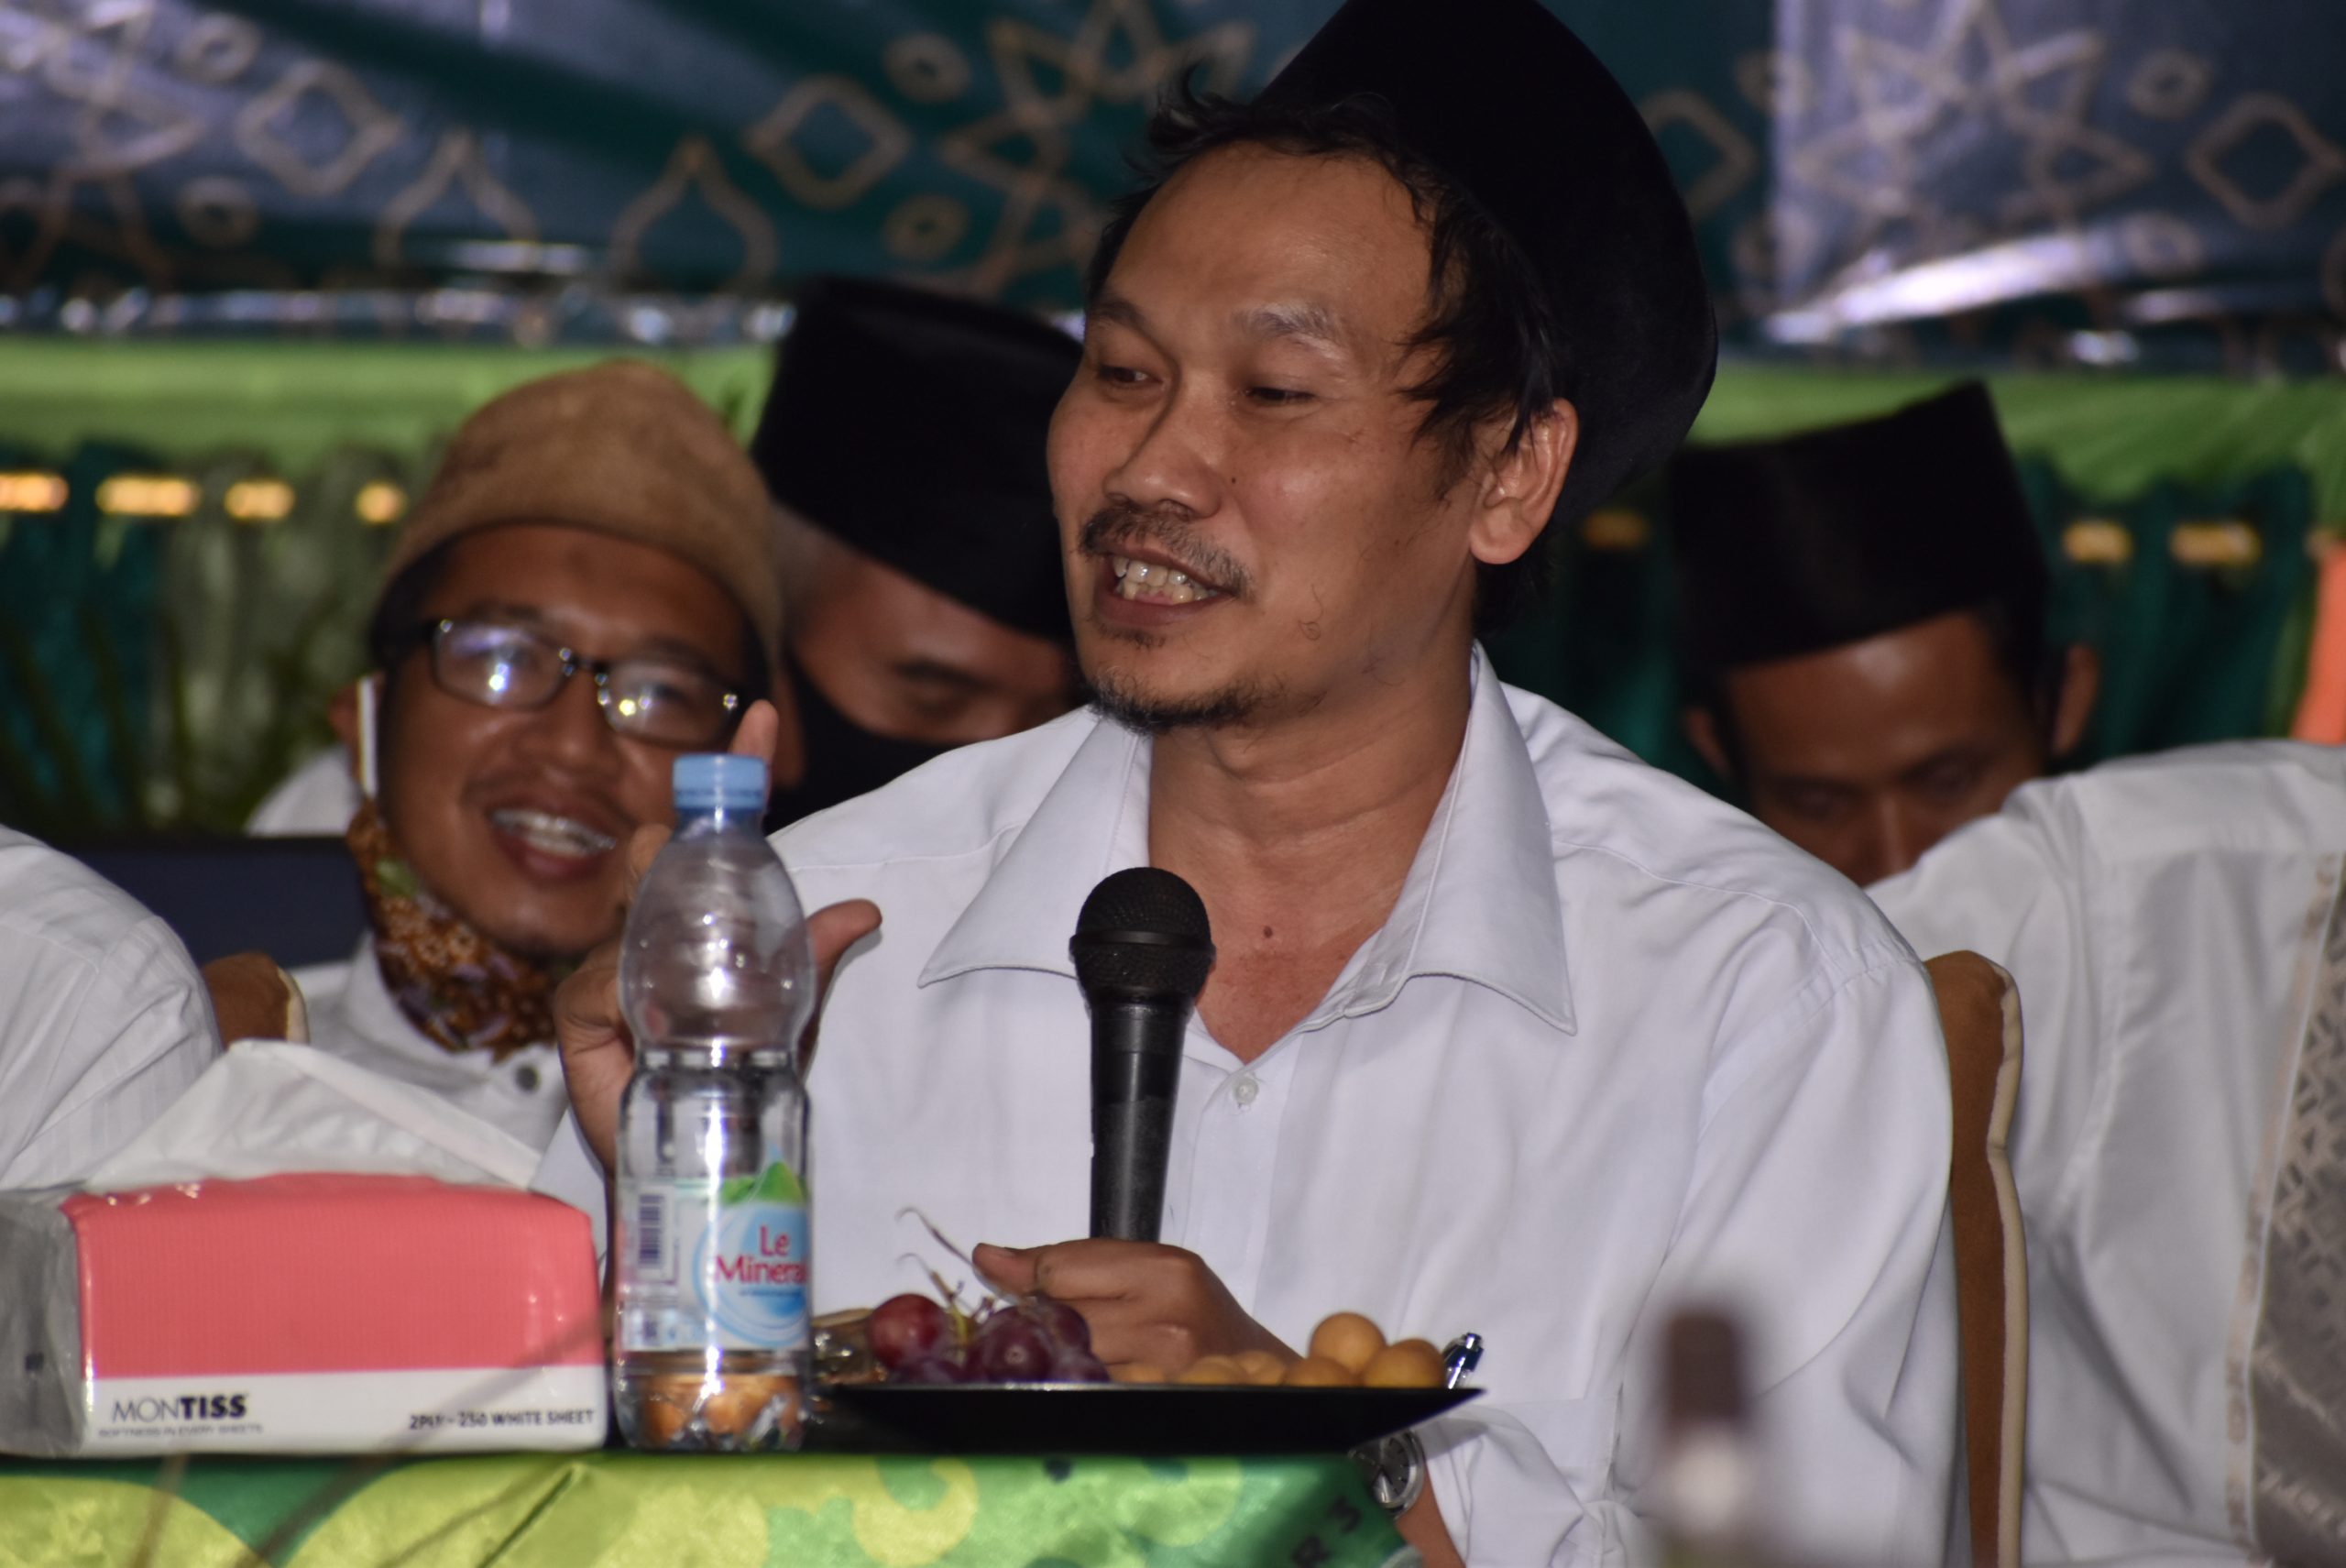 Jihad di Indonesia yakni Mempertahankan supaya Sholat itu Sesuatu yang Indah